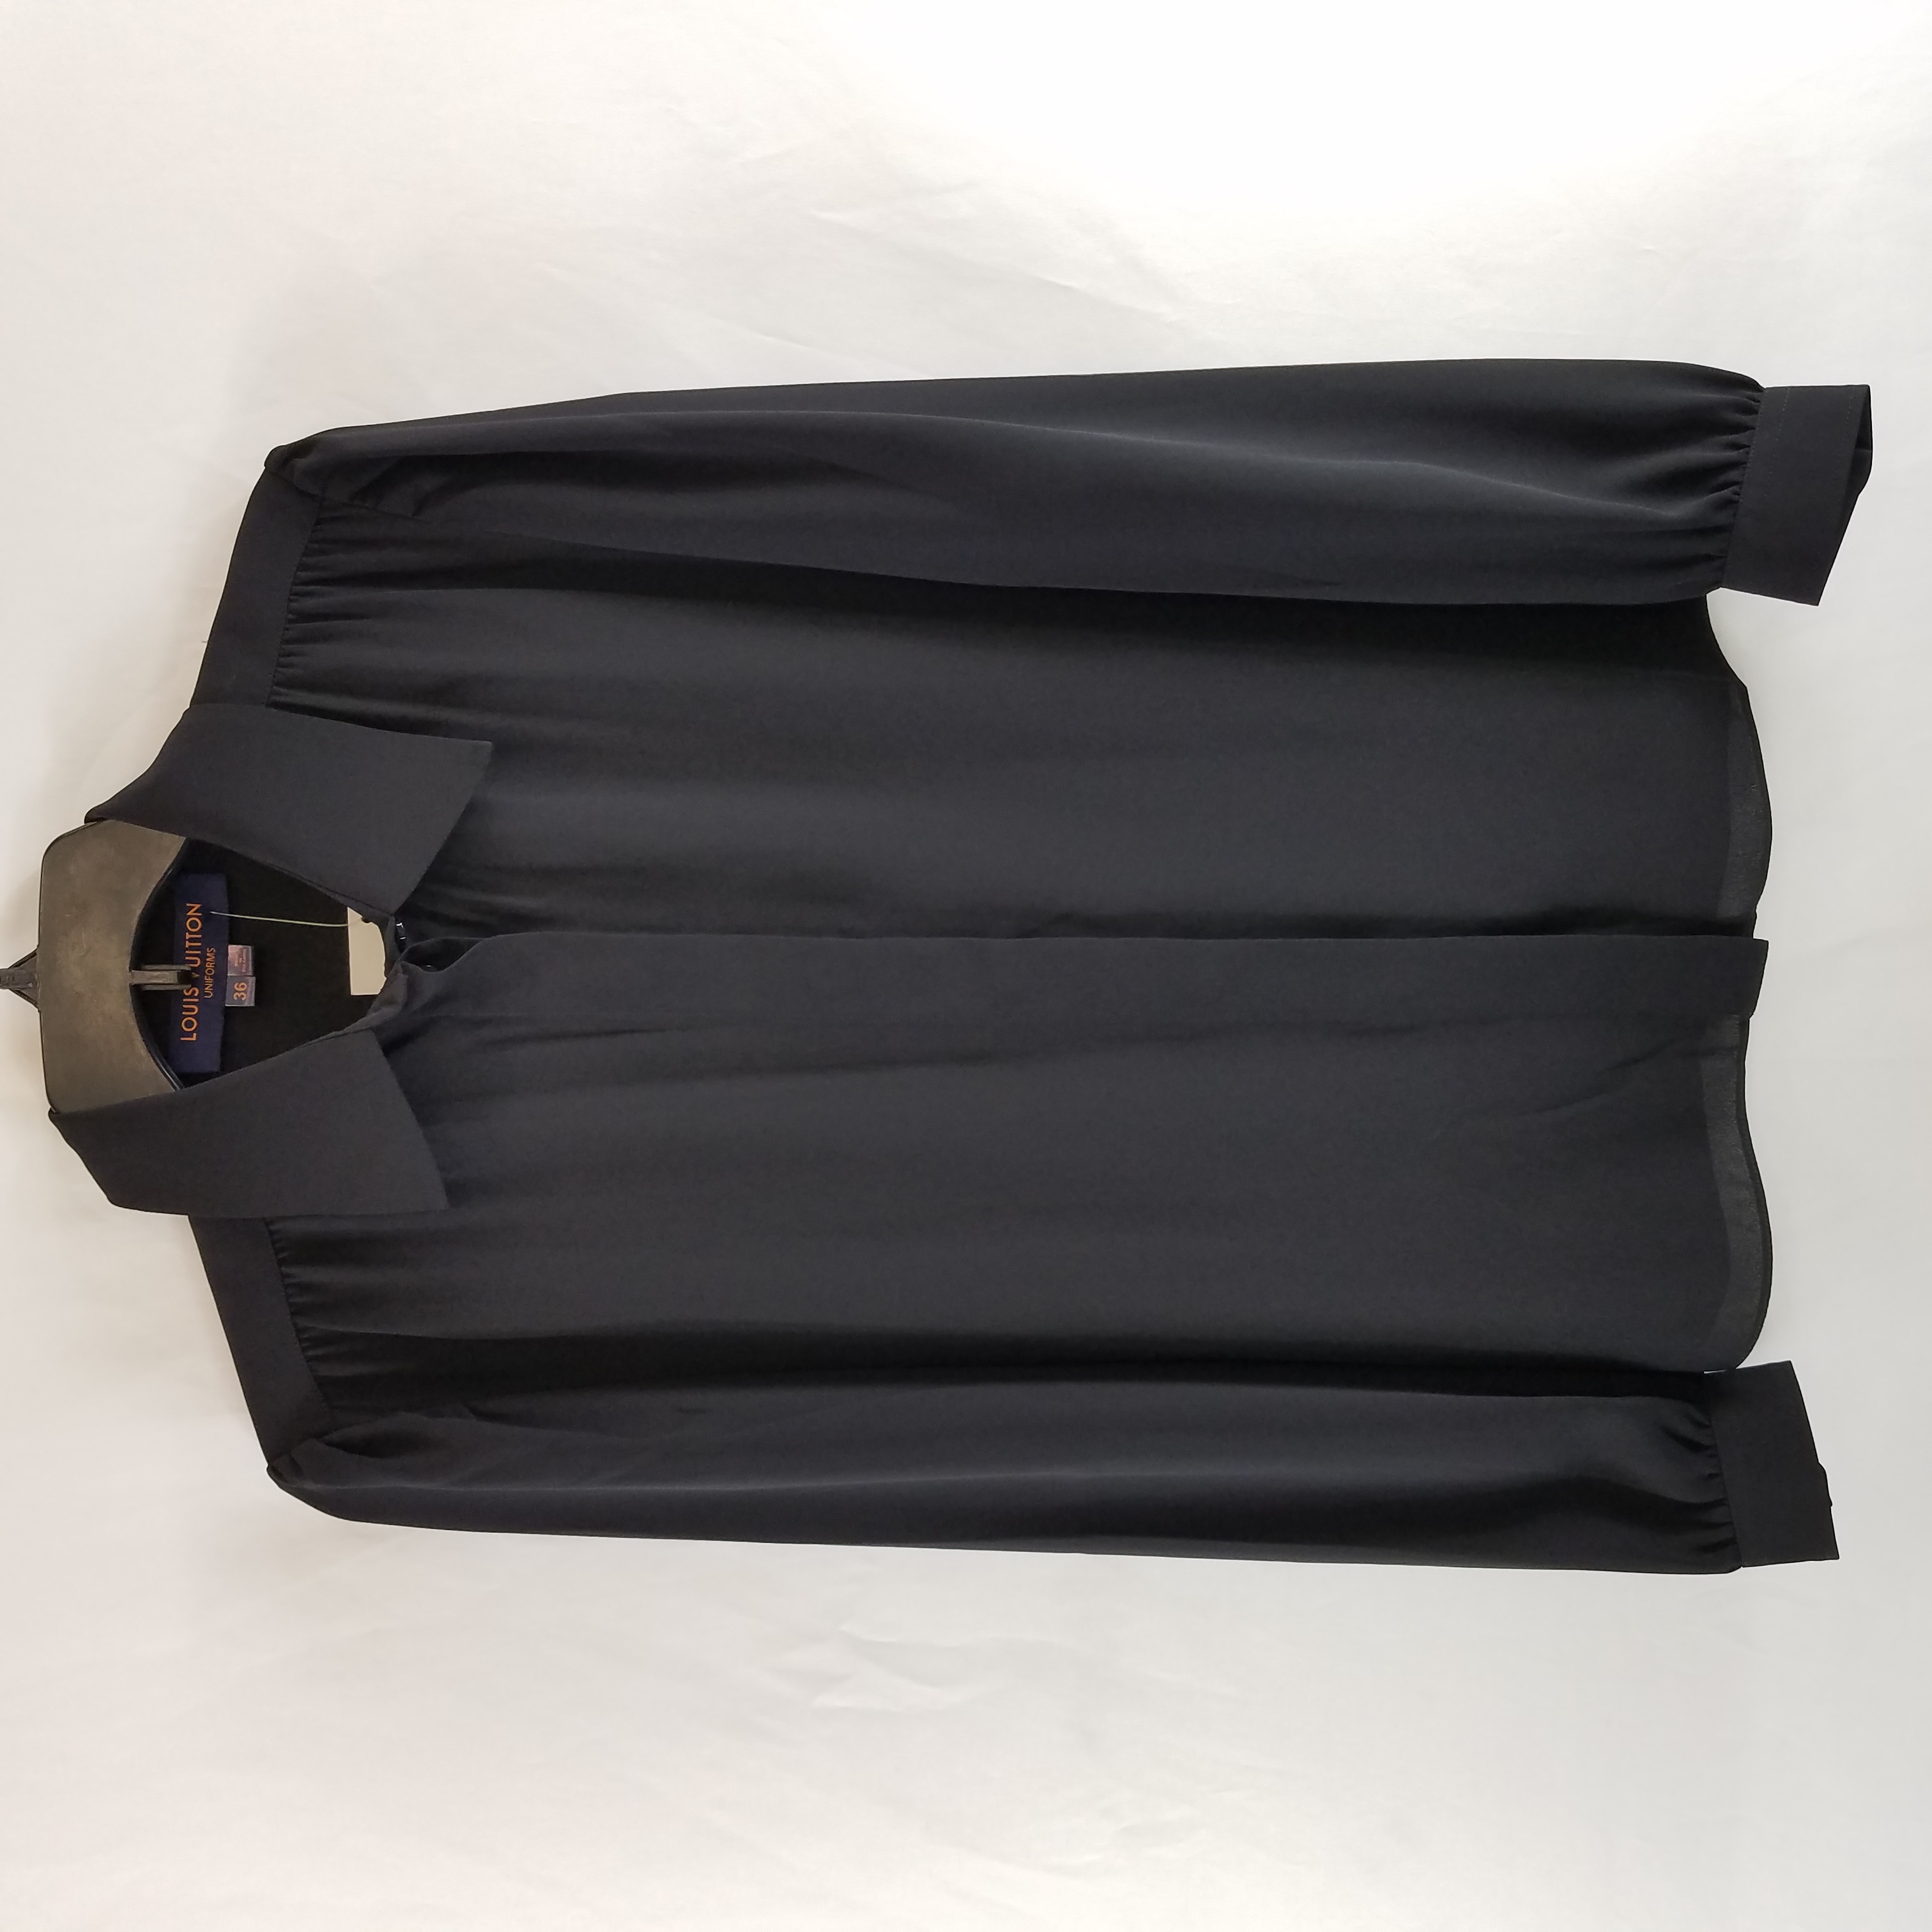 Louis vuitton black baseball jersey shirt lv luxury clothing clothes sport  for men women 121 bjhg